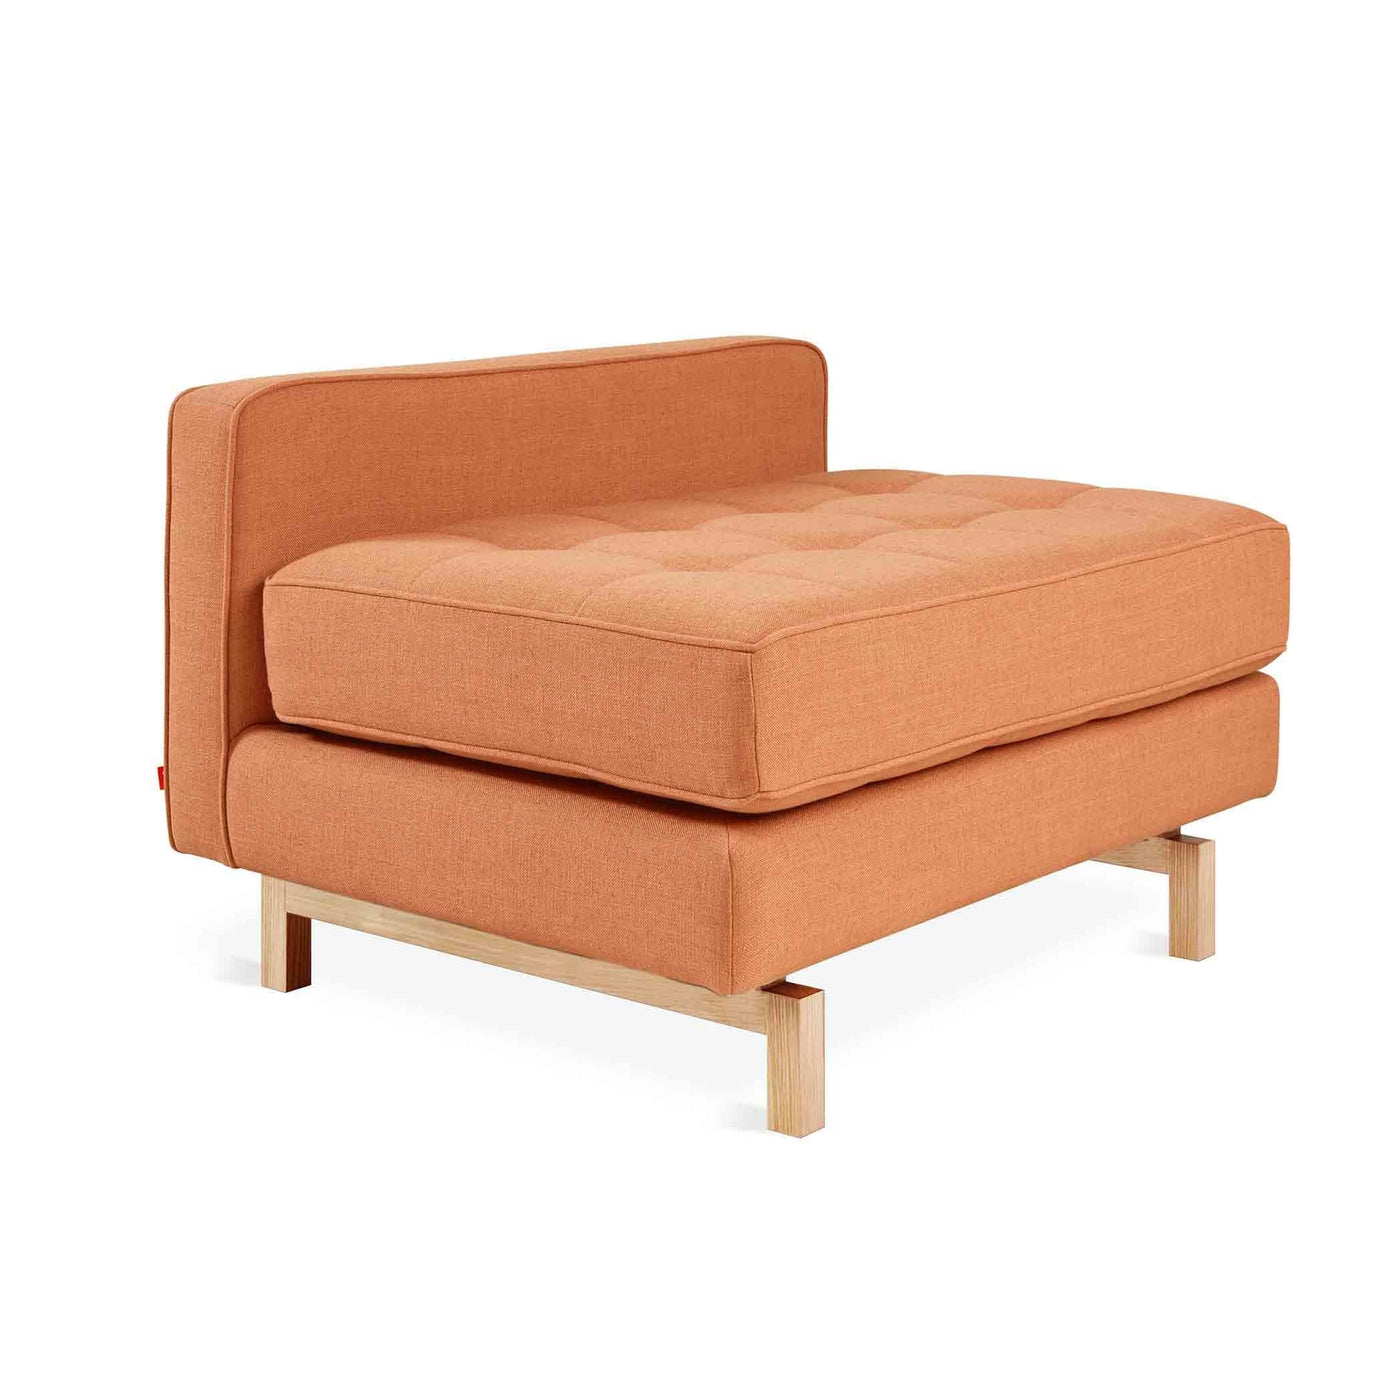 Gus* Modern Jane Lounge 2, sofa sans accoudoirs, en bois et tissu, caledon sedona, naturel